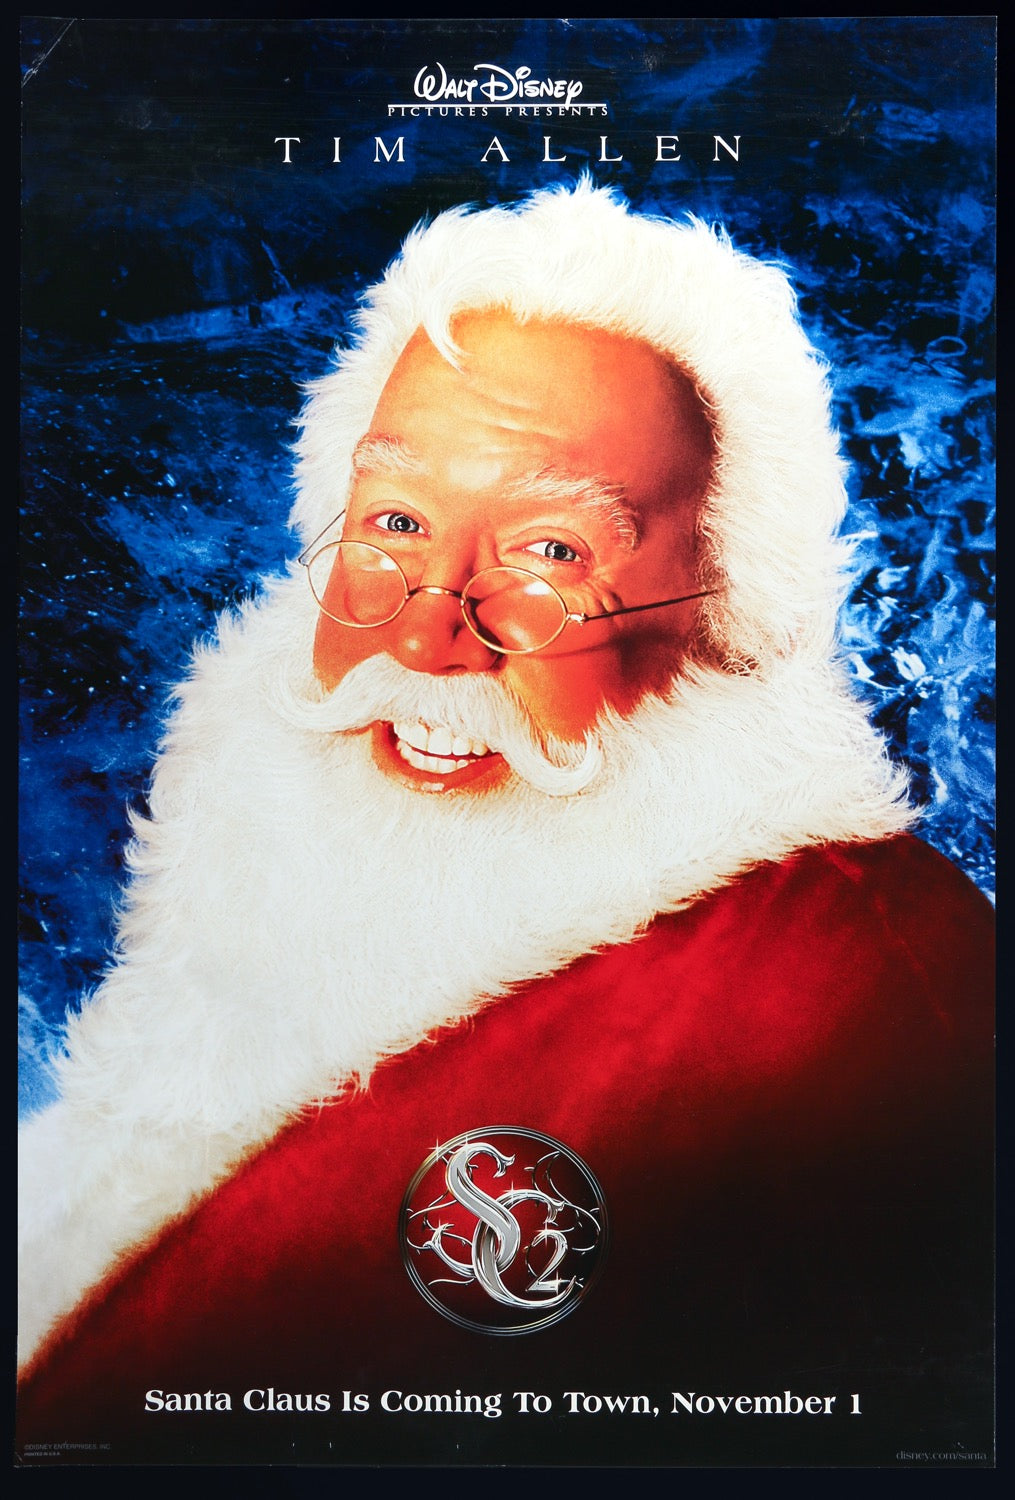 Santa Clause 2 (2002) original movie poster for sale at Original Film Art